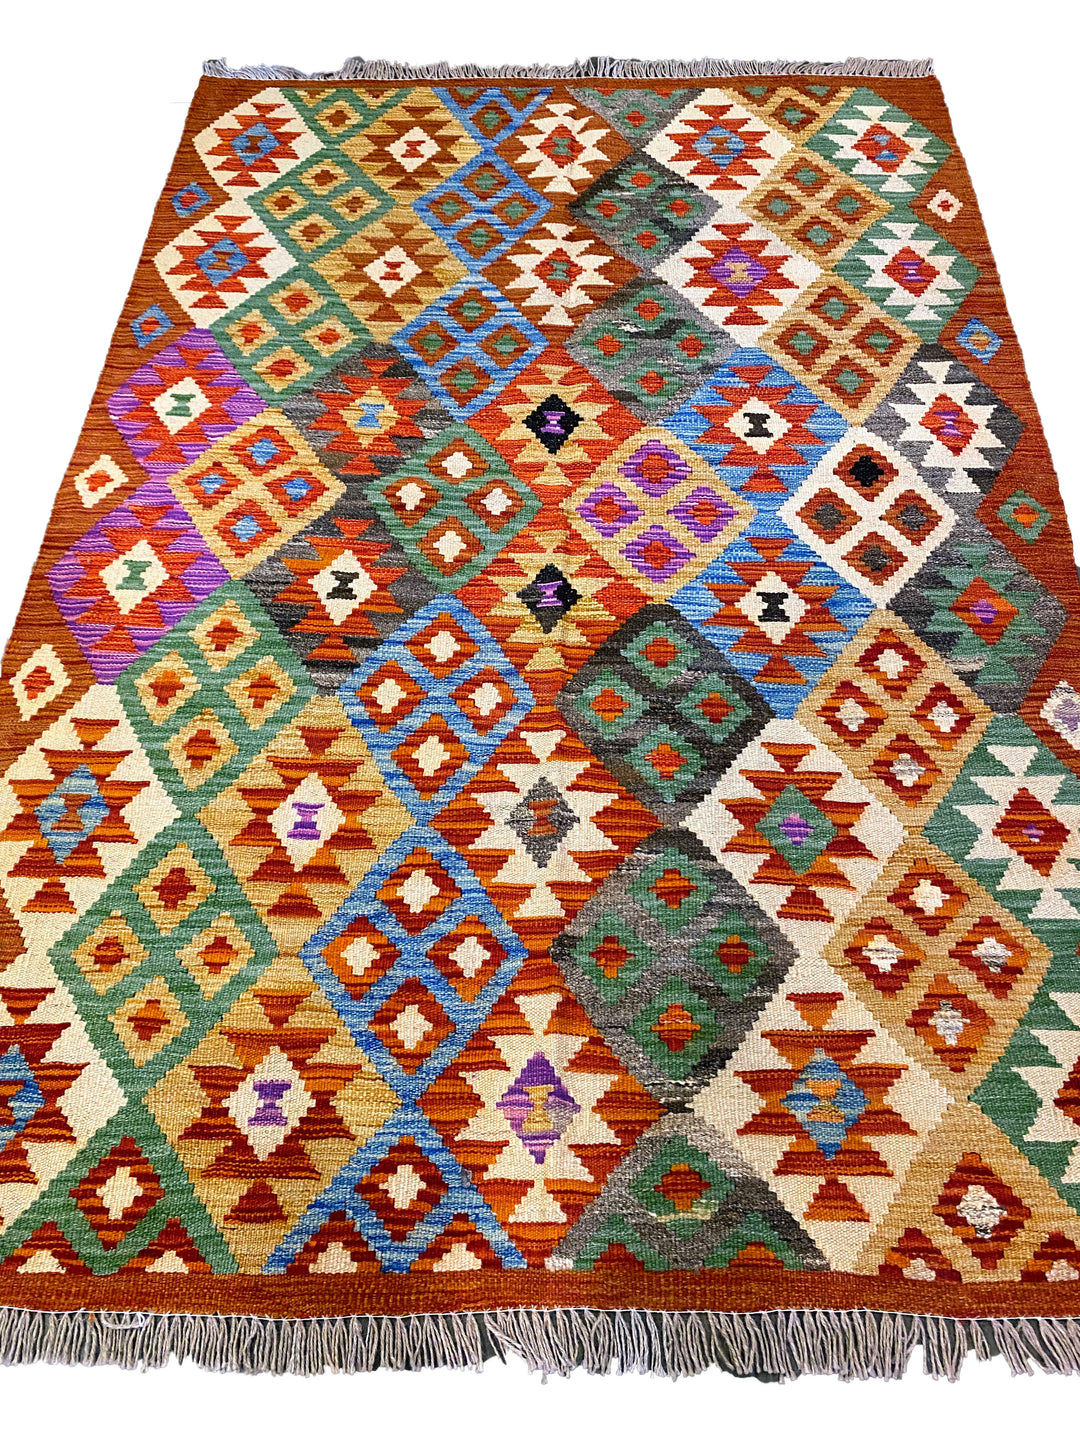 Imama - Size: 5.9 x 4 - Imam Carpet Co